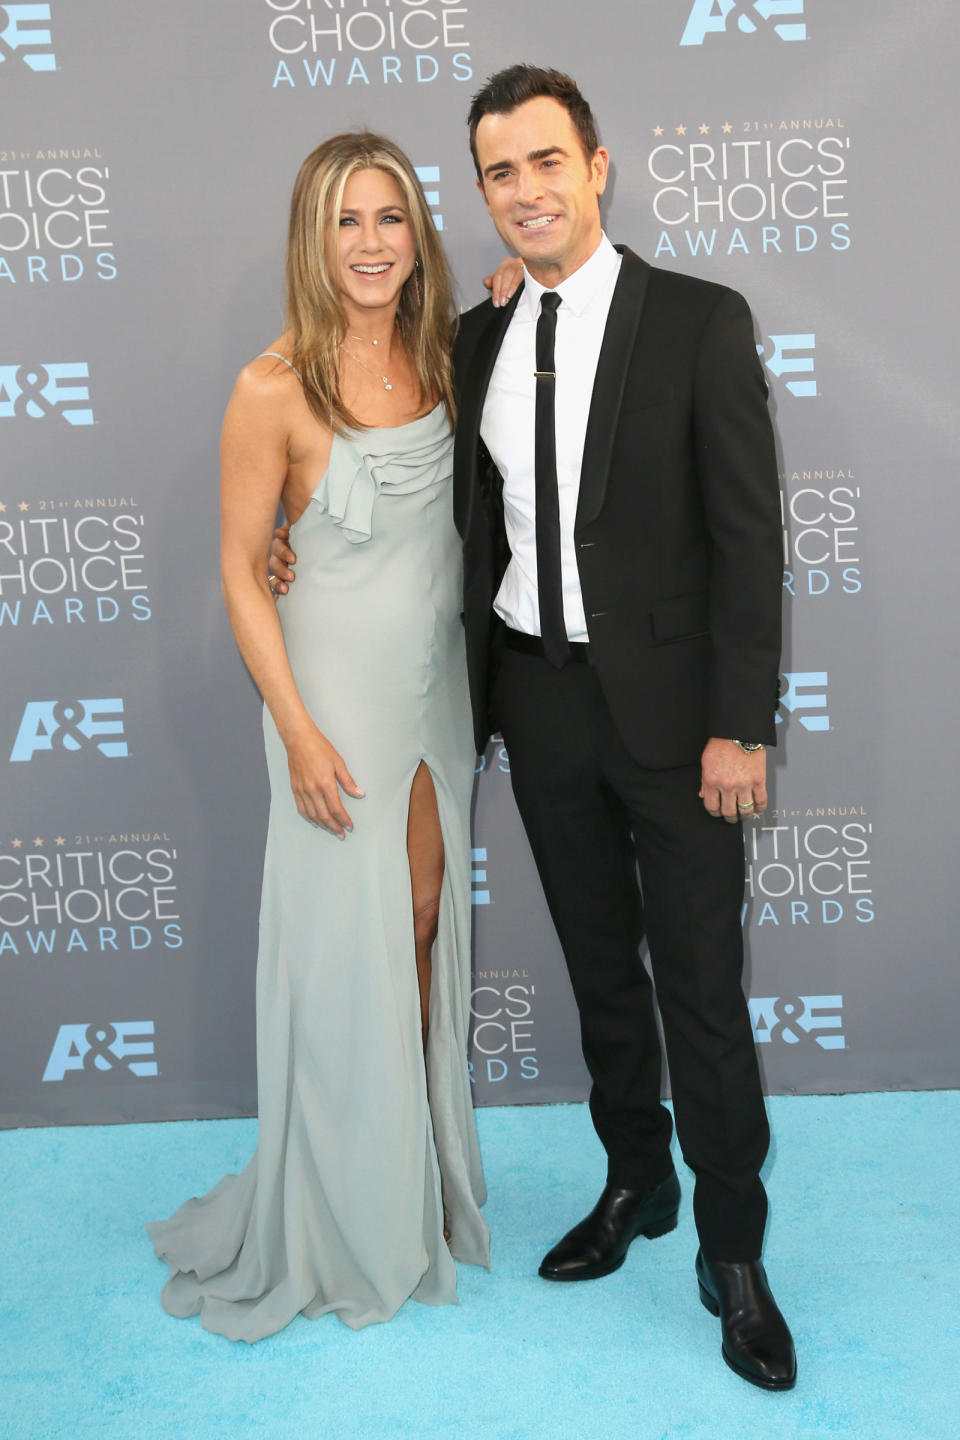 Jennifer Aniston and Justin Theroux